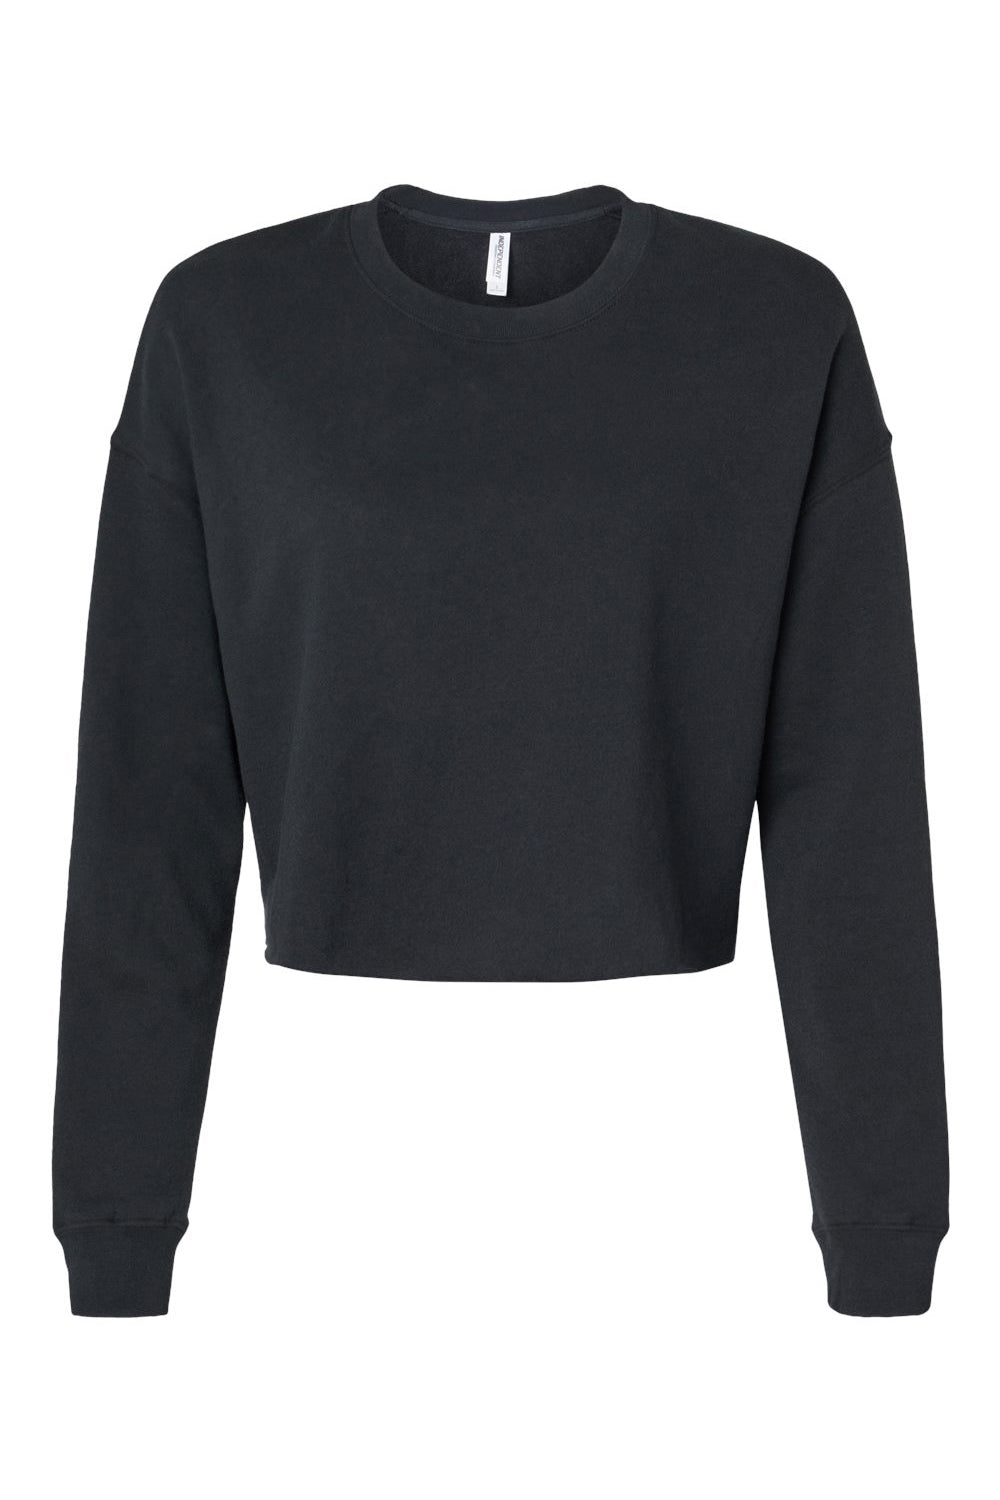 Independent Trading Co. AFX24CRP Womens Crop Crewneck Sweatshirt Black Flat Front